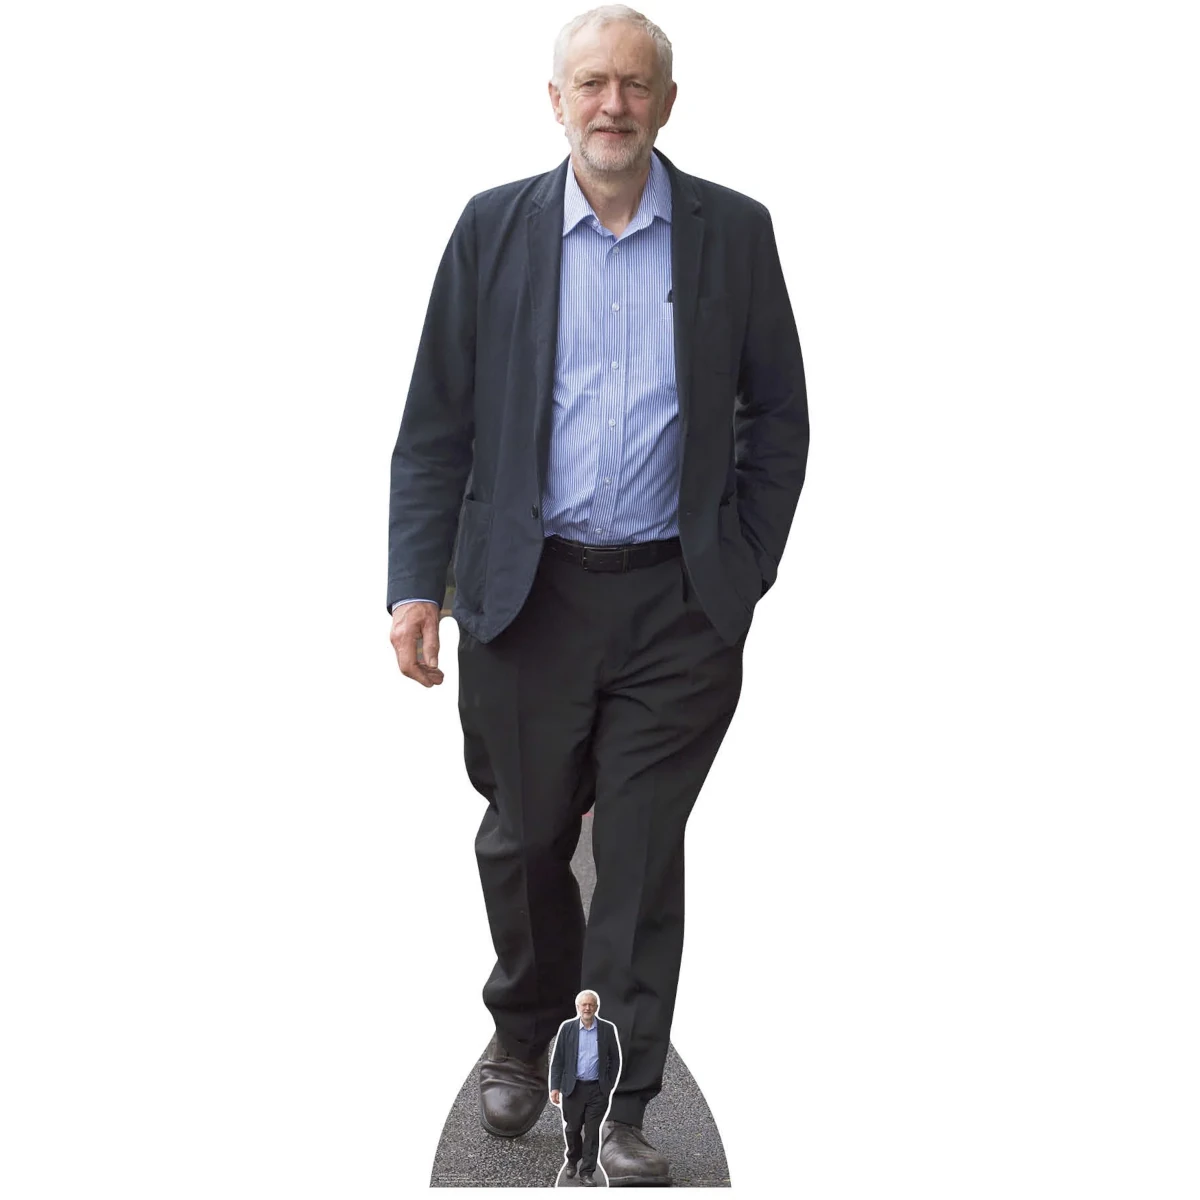 SC941 Jeremy Corbyn (British Politician) Lifesize + Mini Cardboard Cutout Standee Front